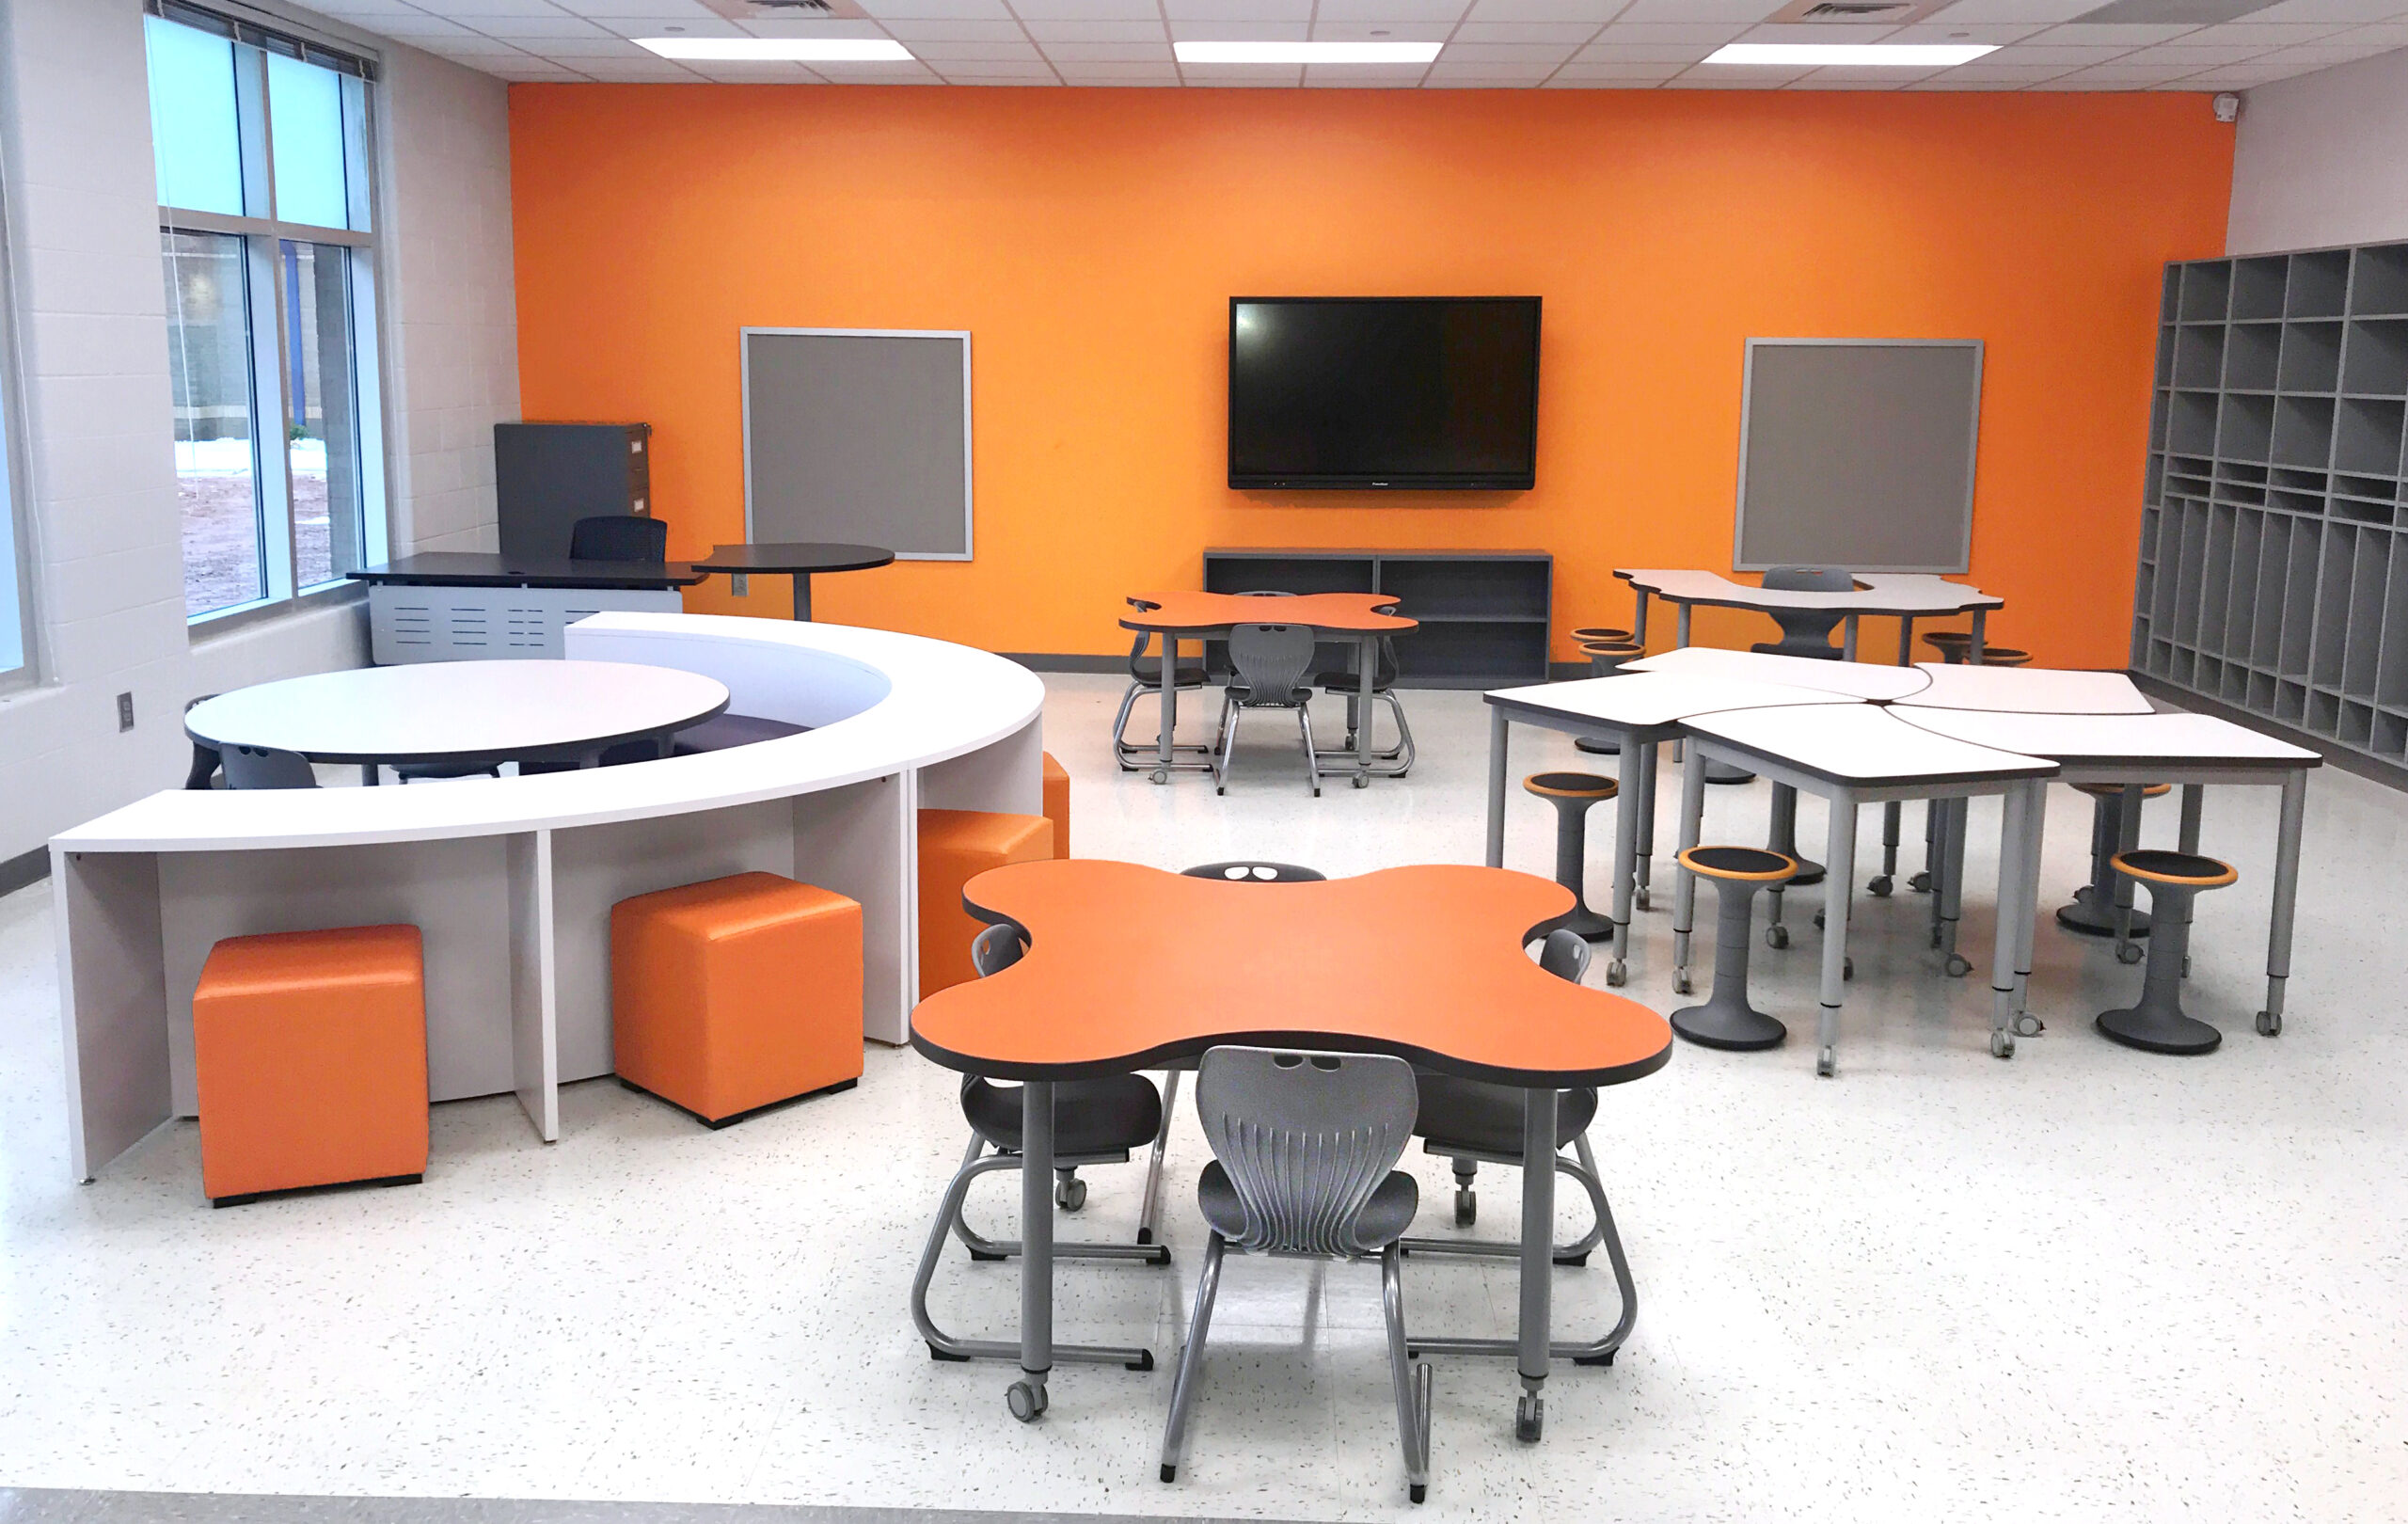 West Rowan Elementary School Creates Modern, Engaging Learning Spaces